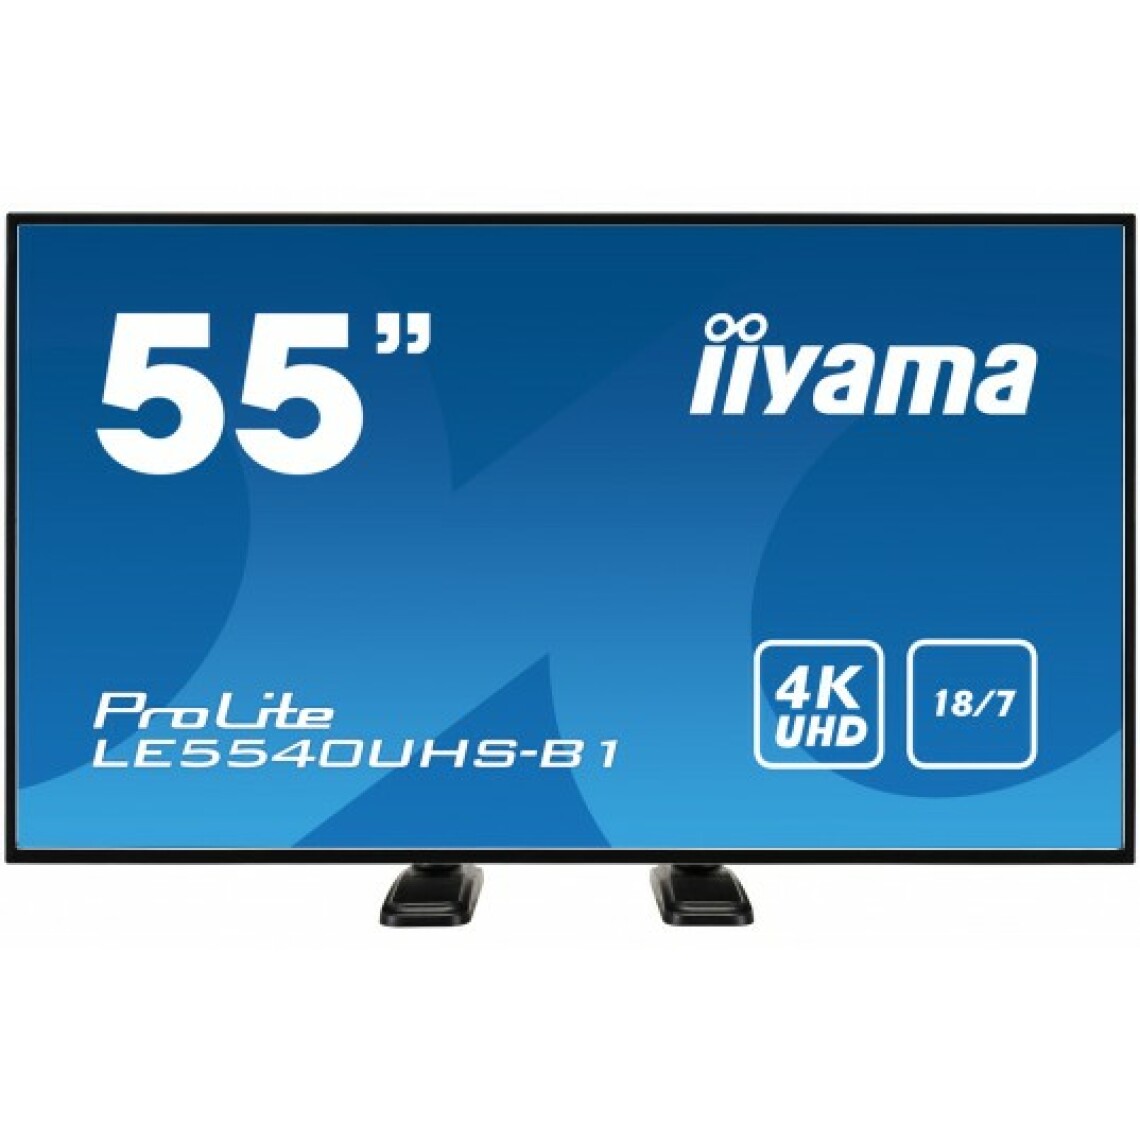 Iiyama - Ecran 55 pouces Full HD LE5540UHS-B1 - 55" 3840x2160, dalle AMVA3 - Moniteur PC